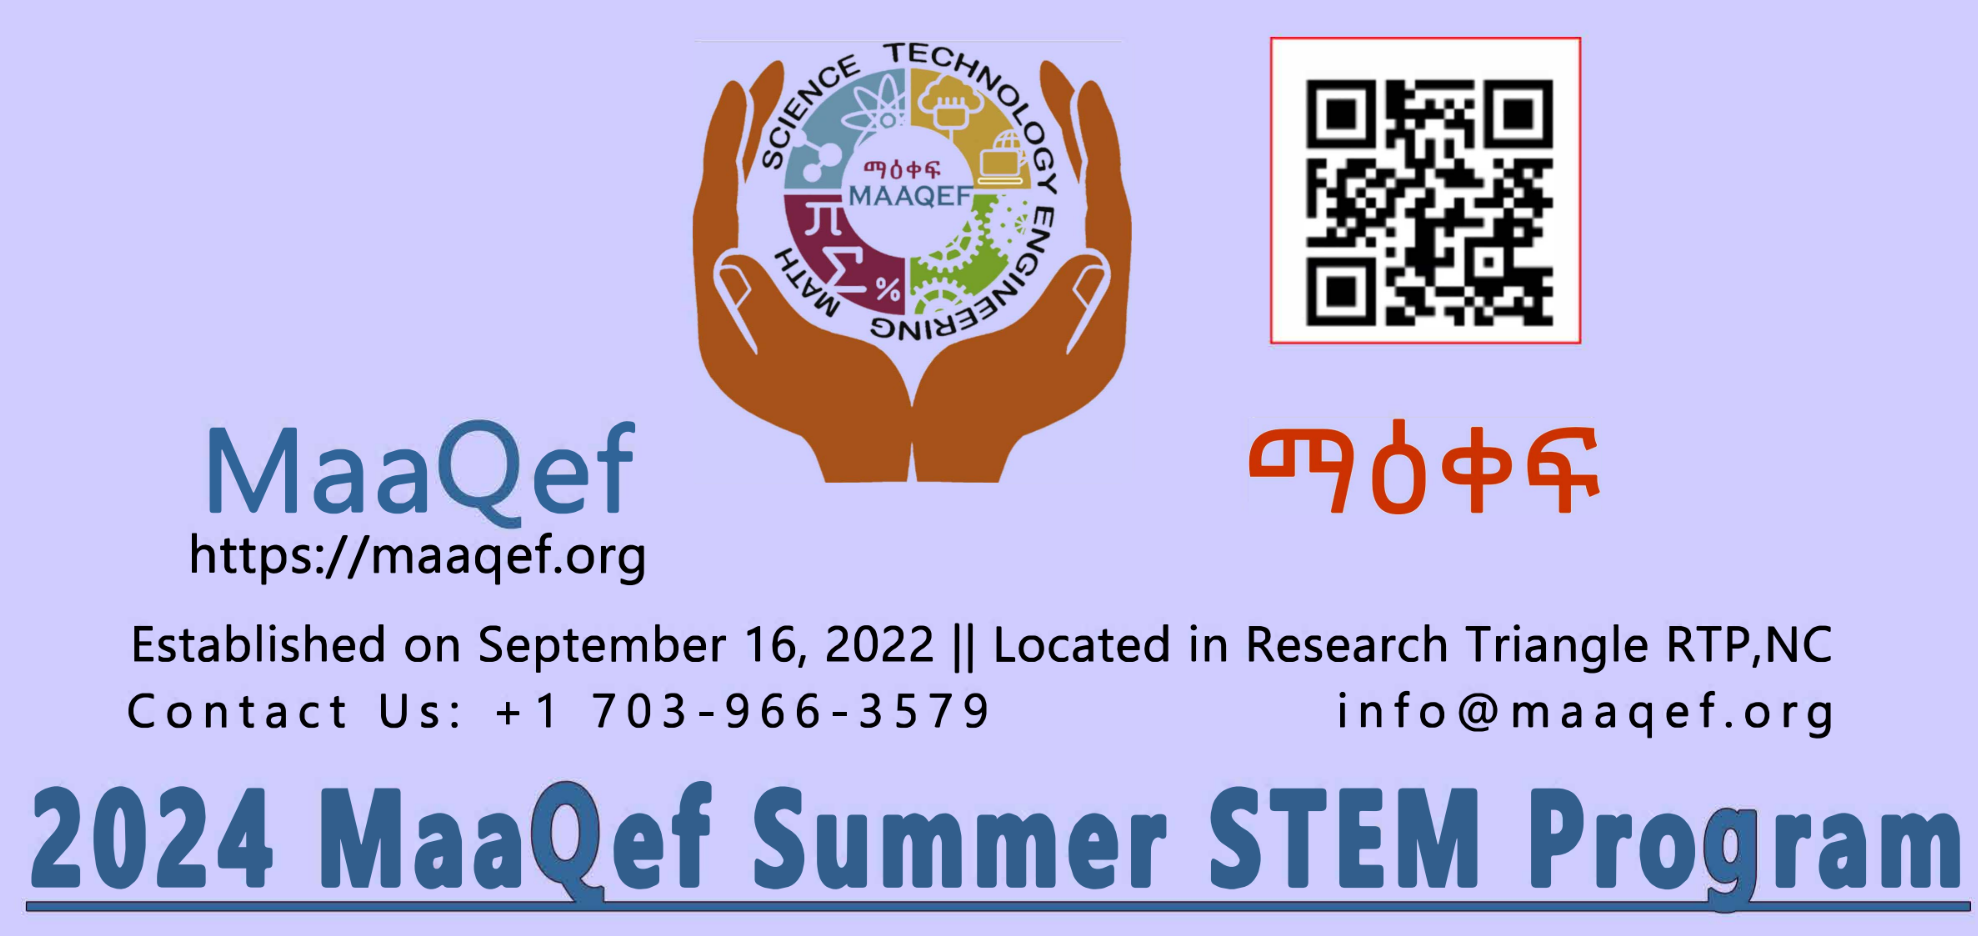 MaaQef 2024 Summer STEM event